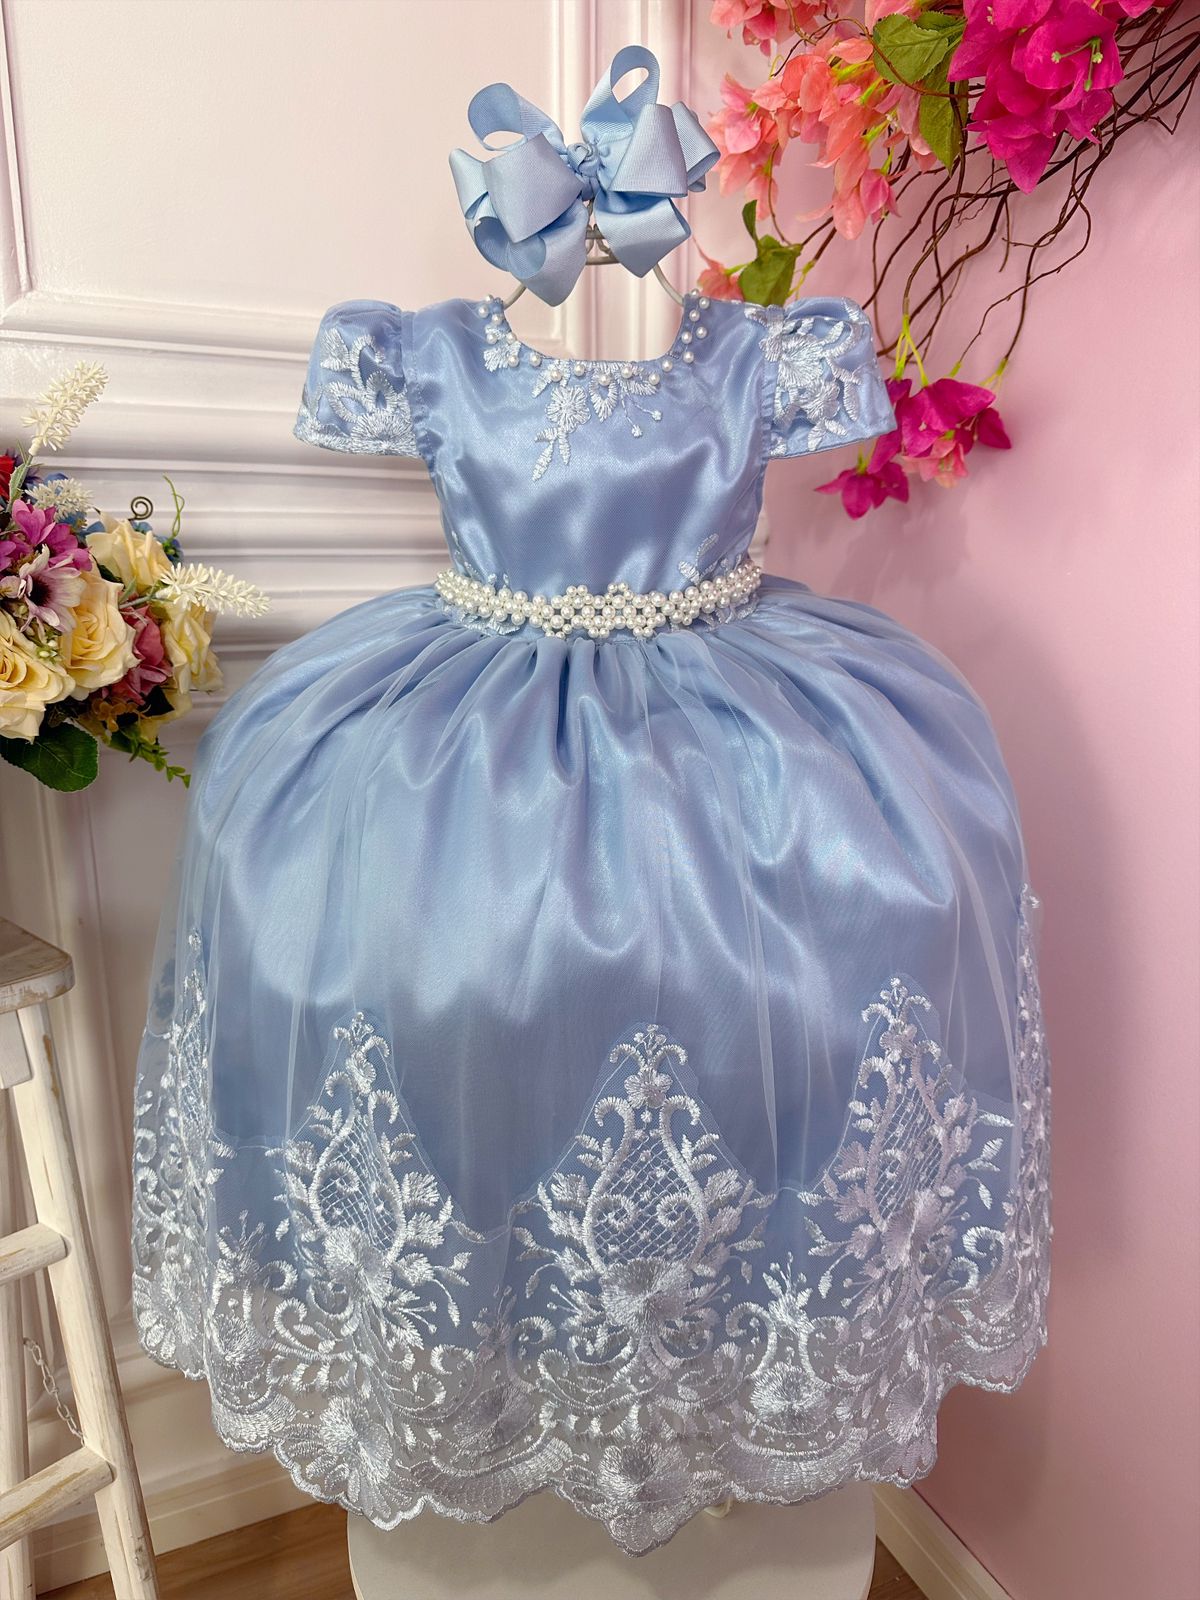 Vestido Infantil Azul C/ a Renda Realeza e Cinto de Pérolas